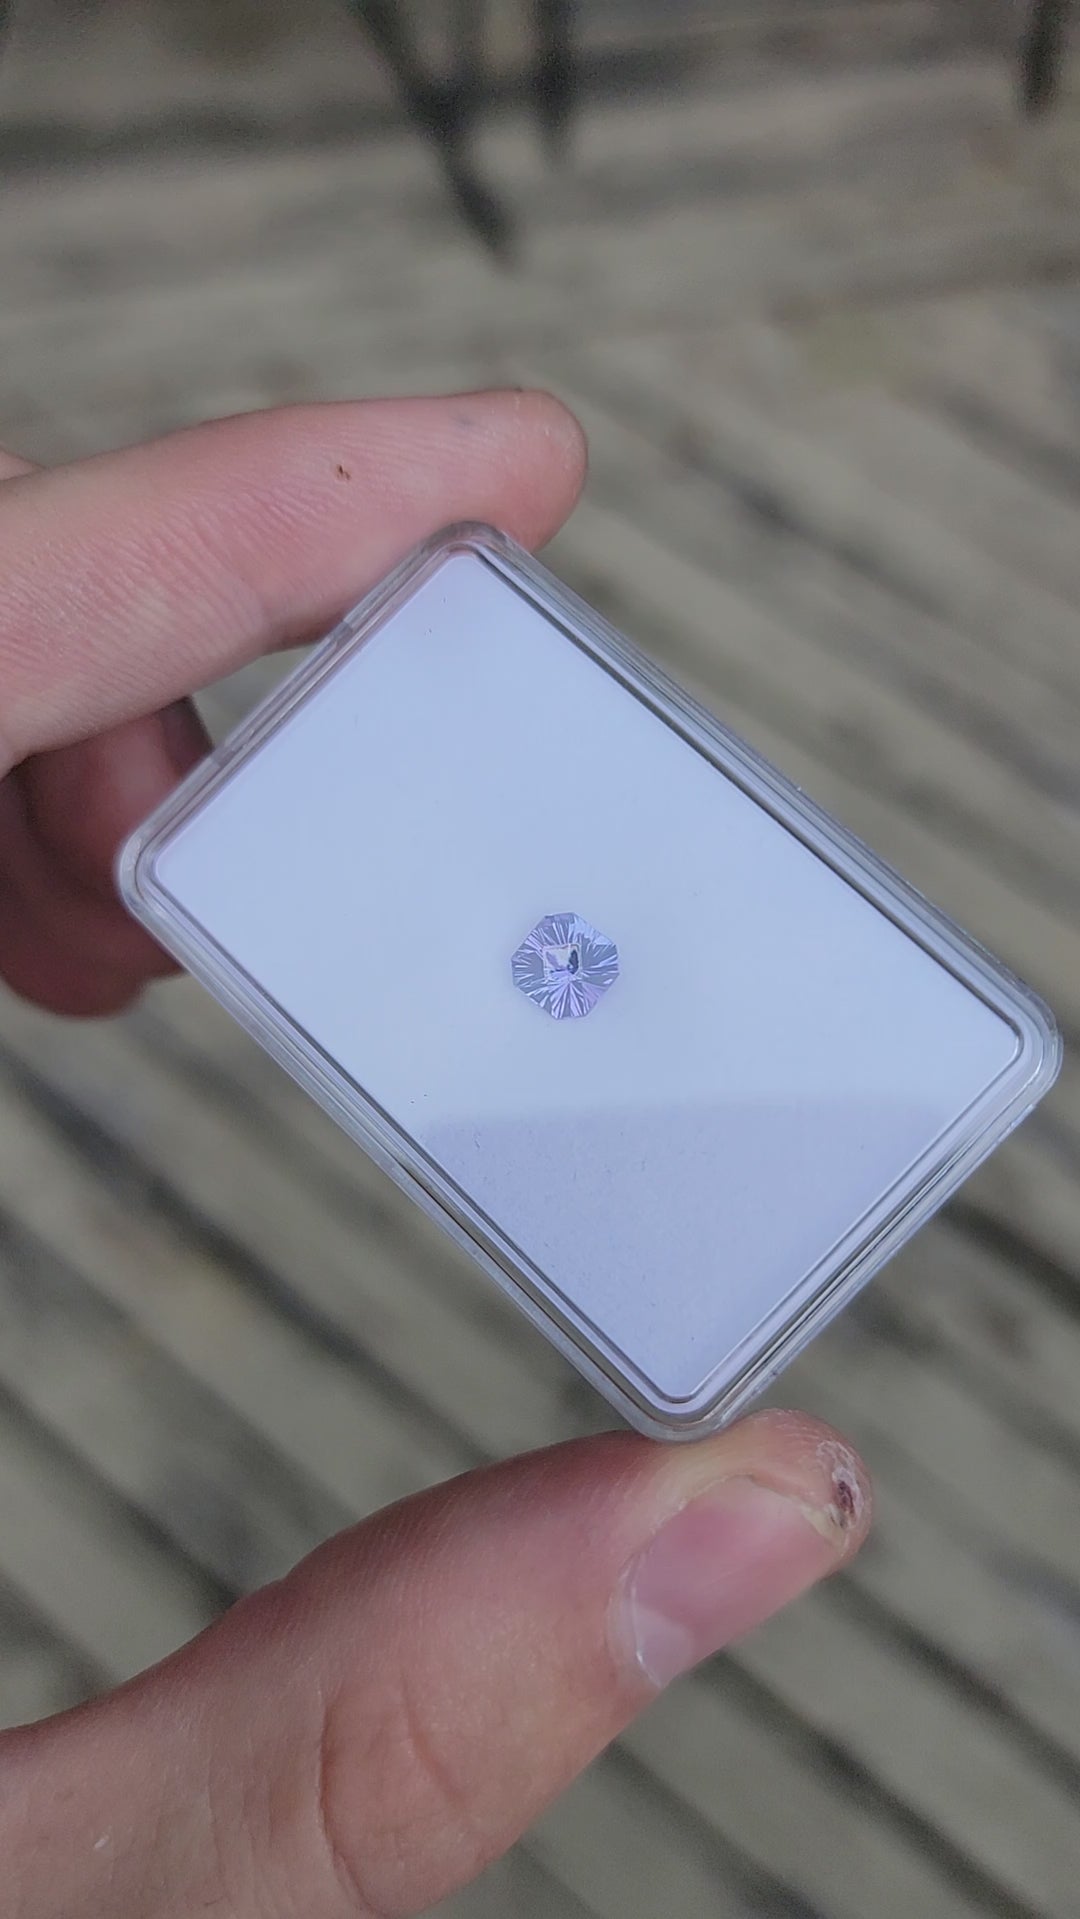 Blue/Purple Tanzanite Square Octagon - 1.34 carats -6.4x7.2mm - Fantasy Cut